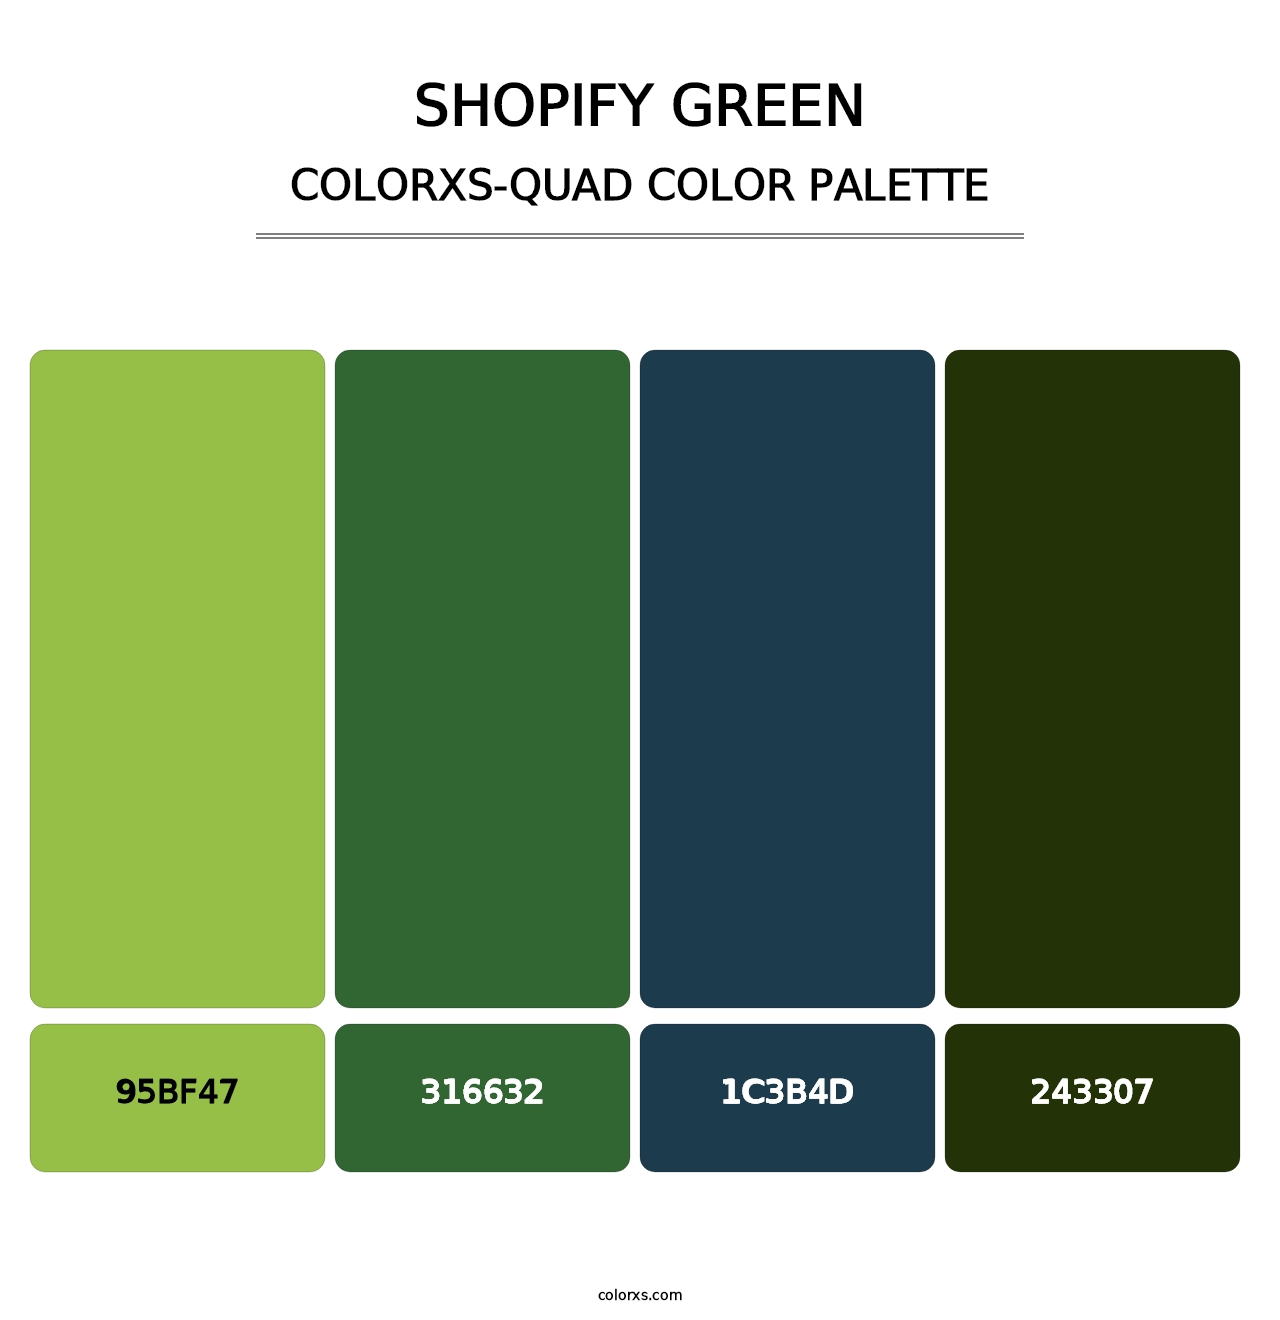 Shopify Green - Colorxs Quad Palette